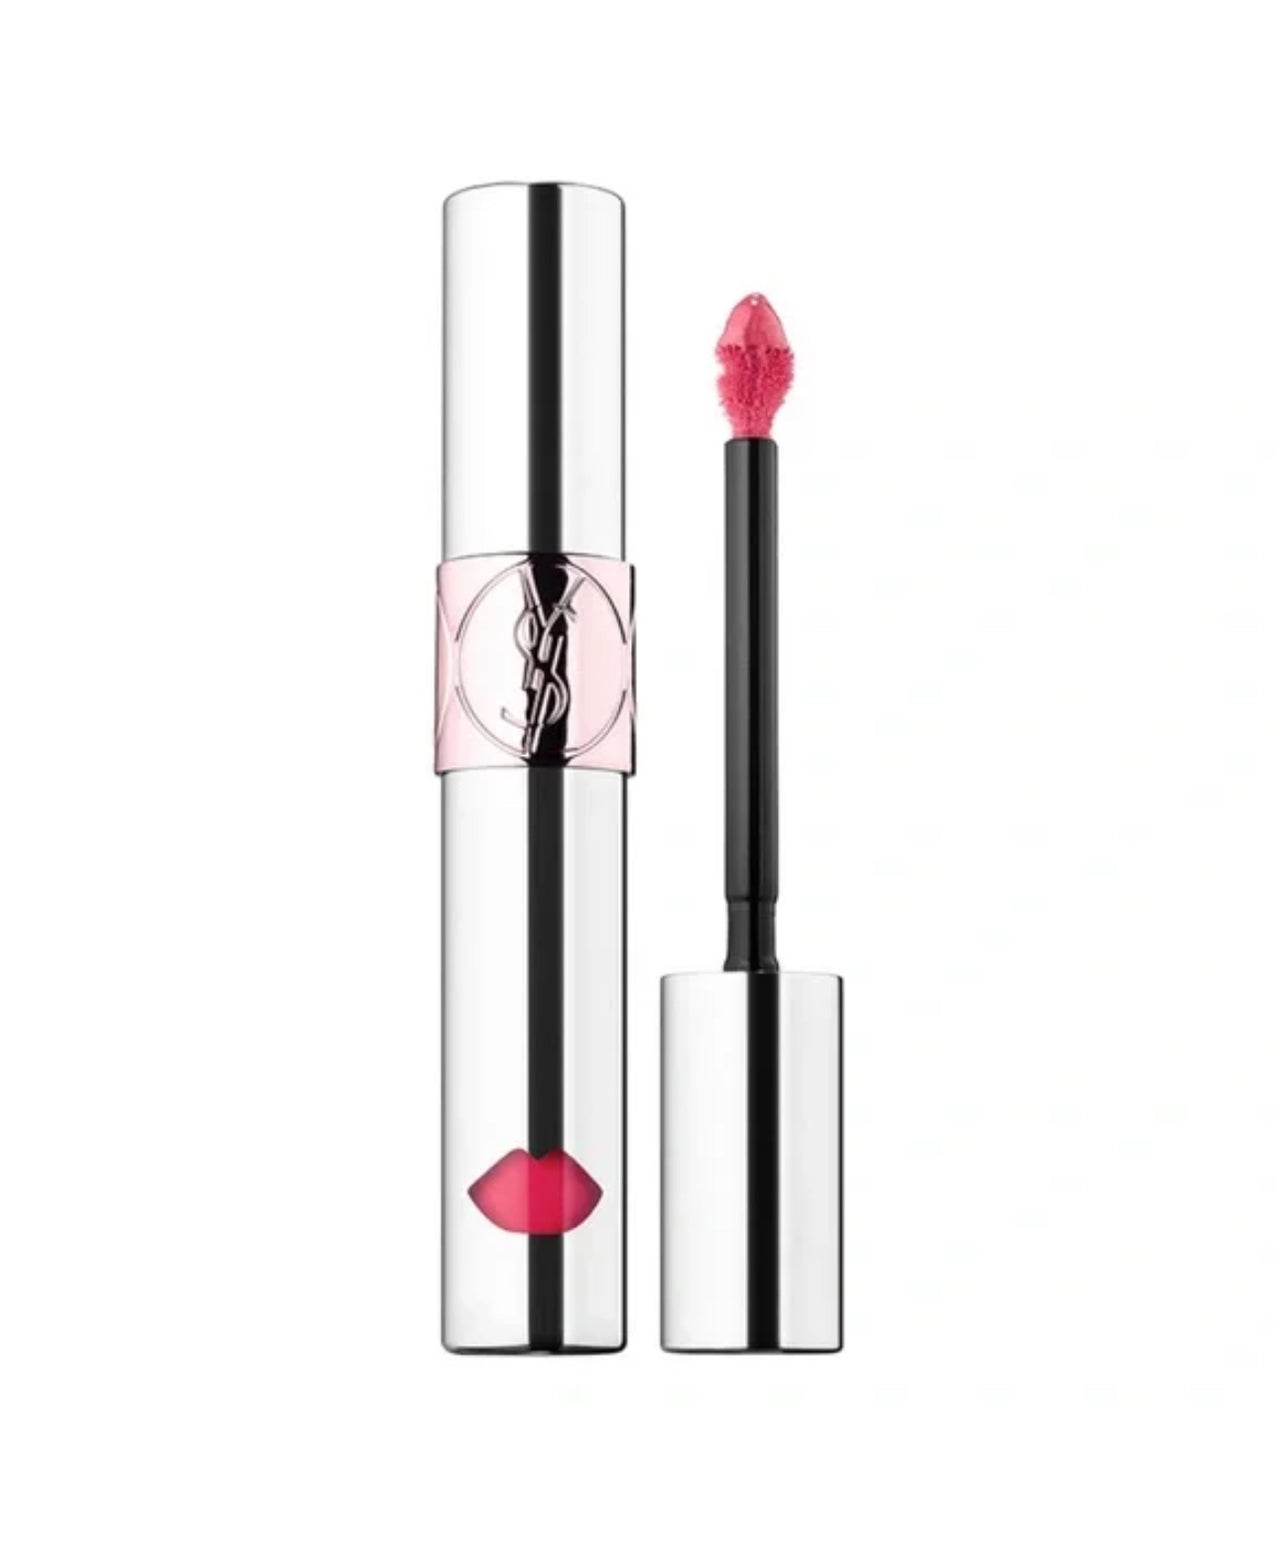 Yves Saint Laurent “Expose Me Rose” Volupte Colour Balm Liquid Lipstick